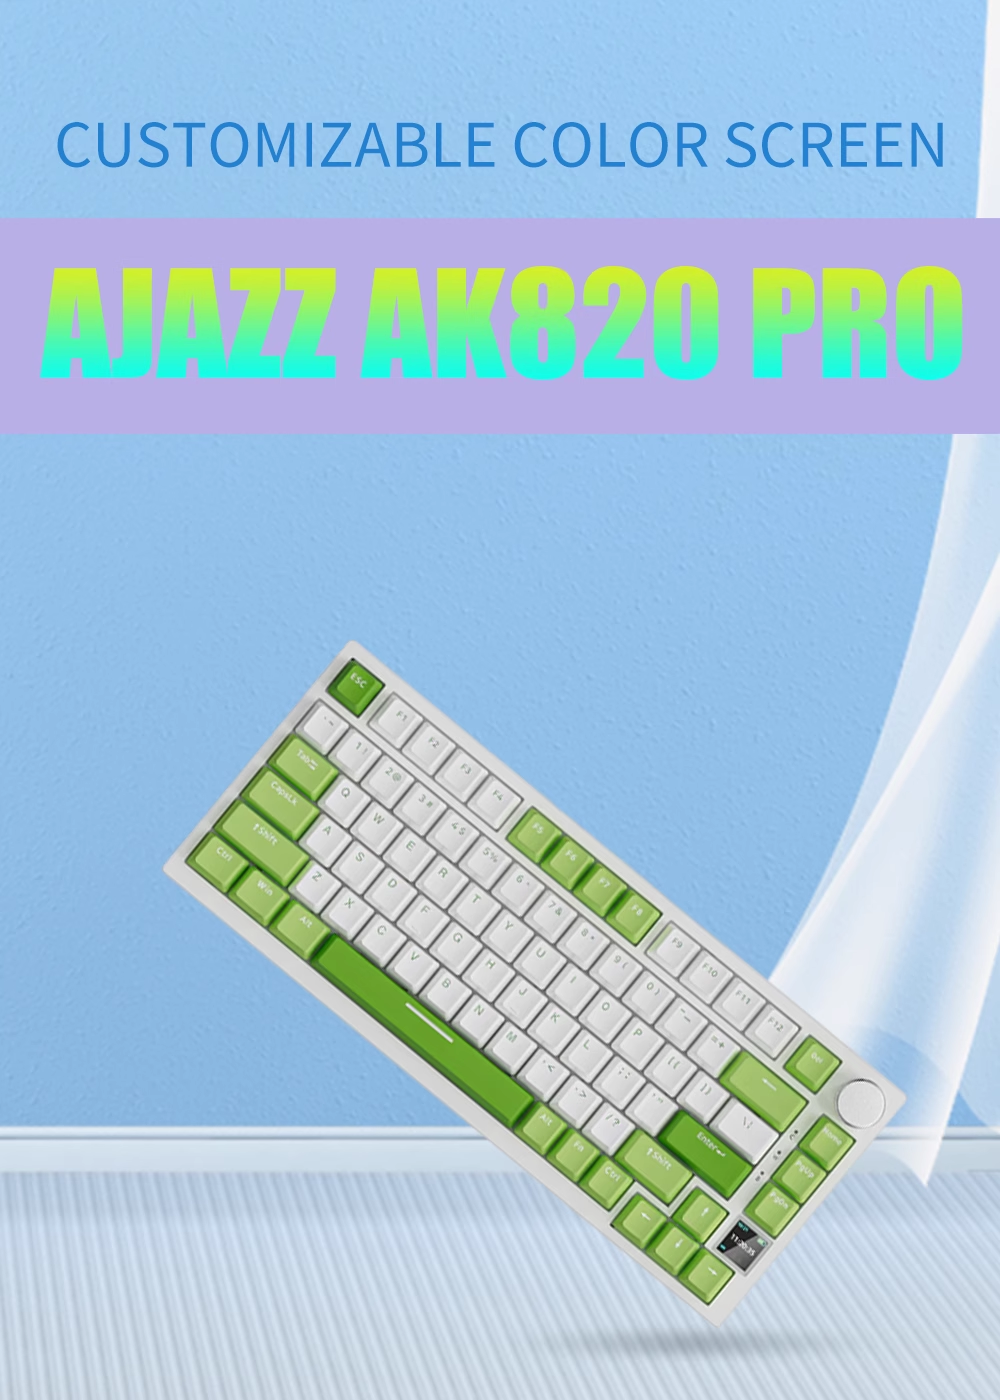 Ajazz AK820 Pro Keyboard - Tapelf